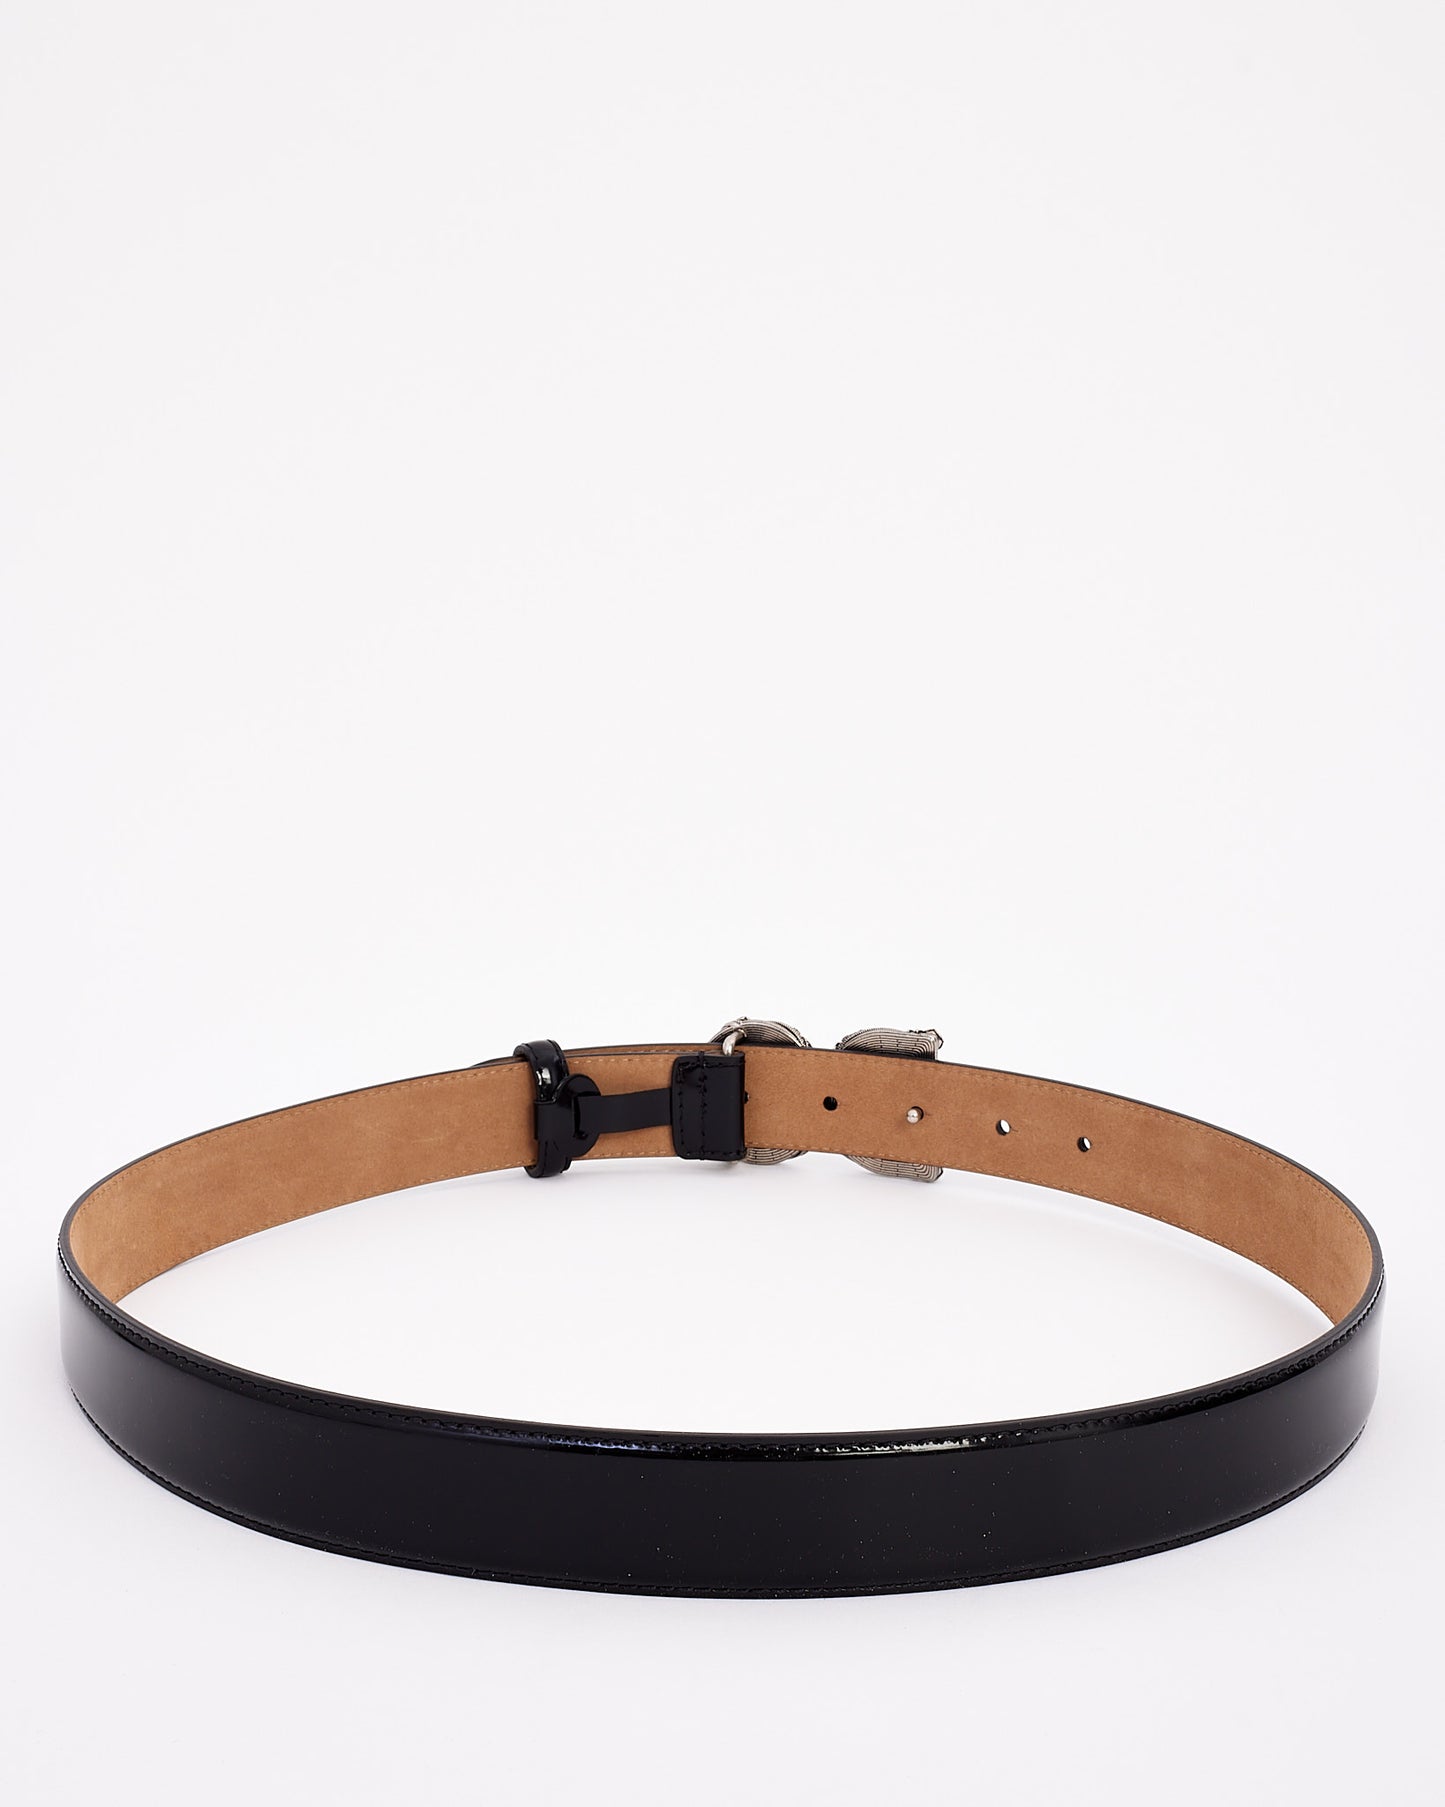 Dolce & Gabbana Black Patent Leather Baroque Belt - 85/34